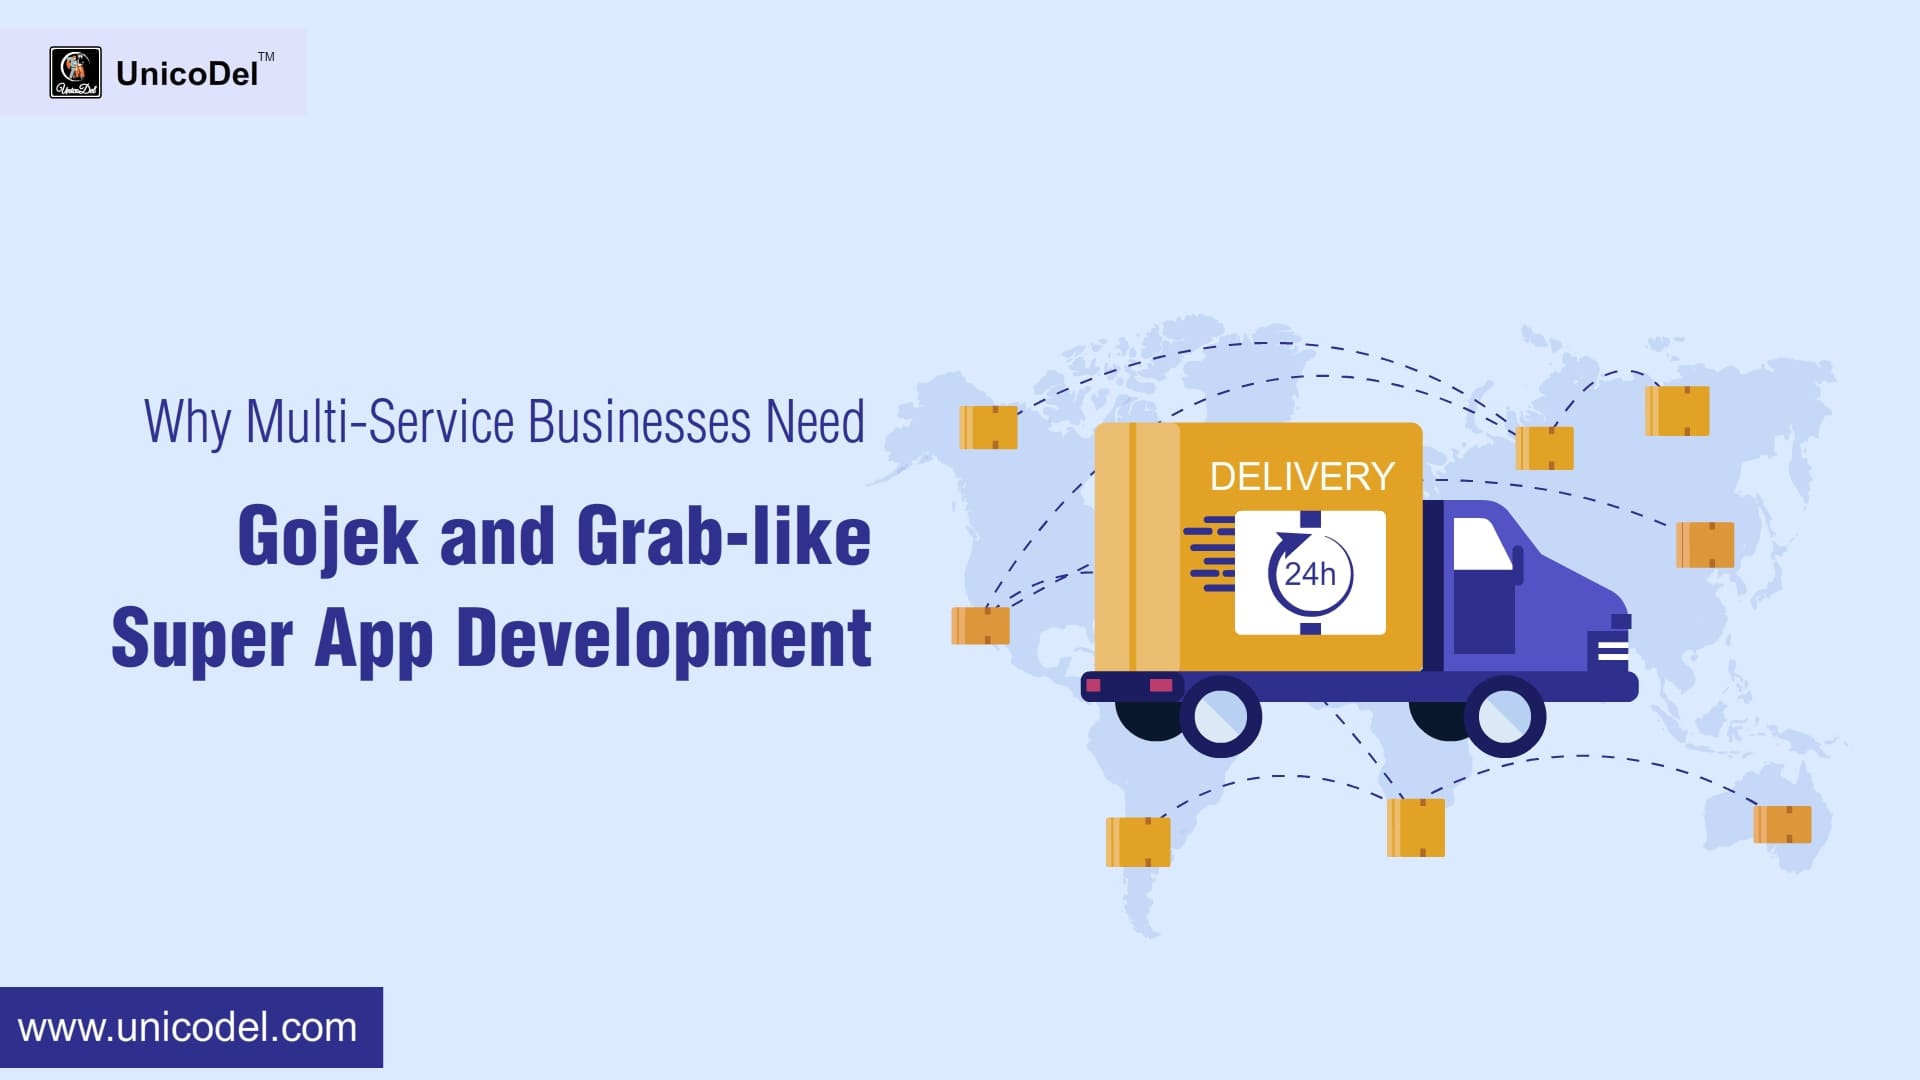 Why Multi-Service Businesses Need Gojek and Grab-like Super App Development?